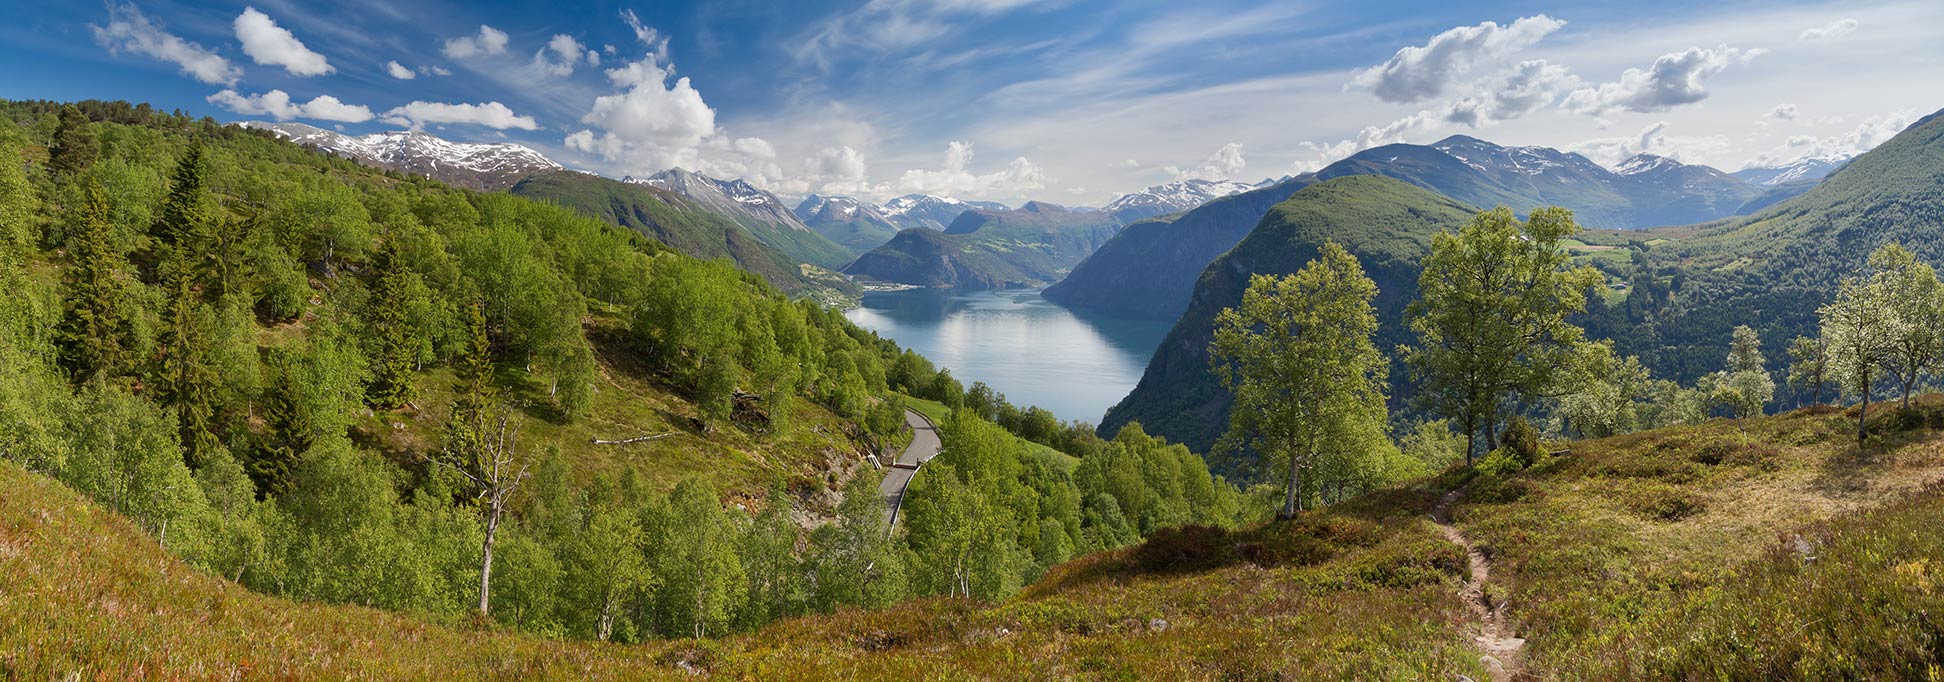 Norddalsfjorden from a mountain hillside near Kilsti in Norddal, Norway